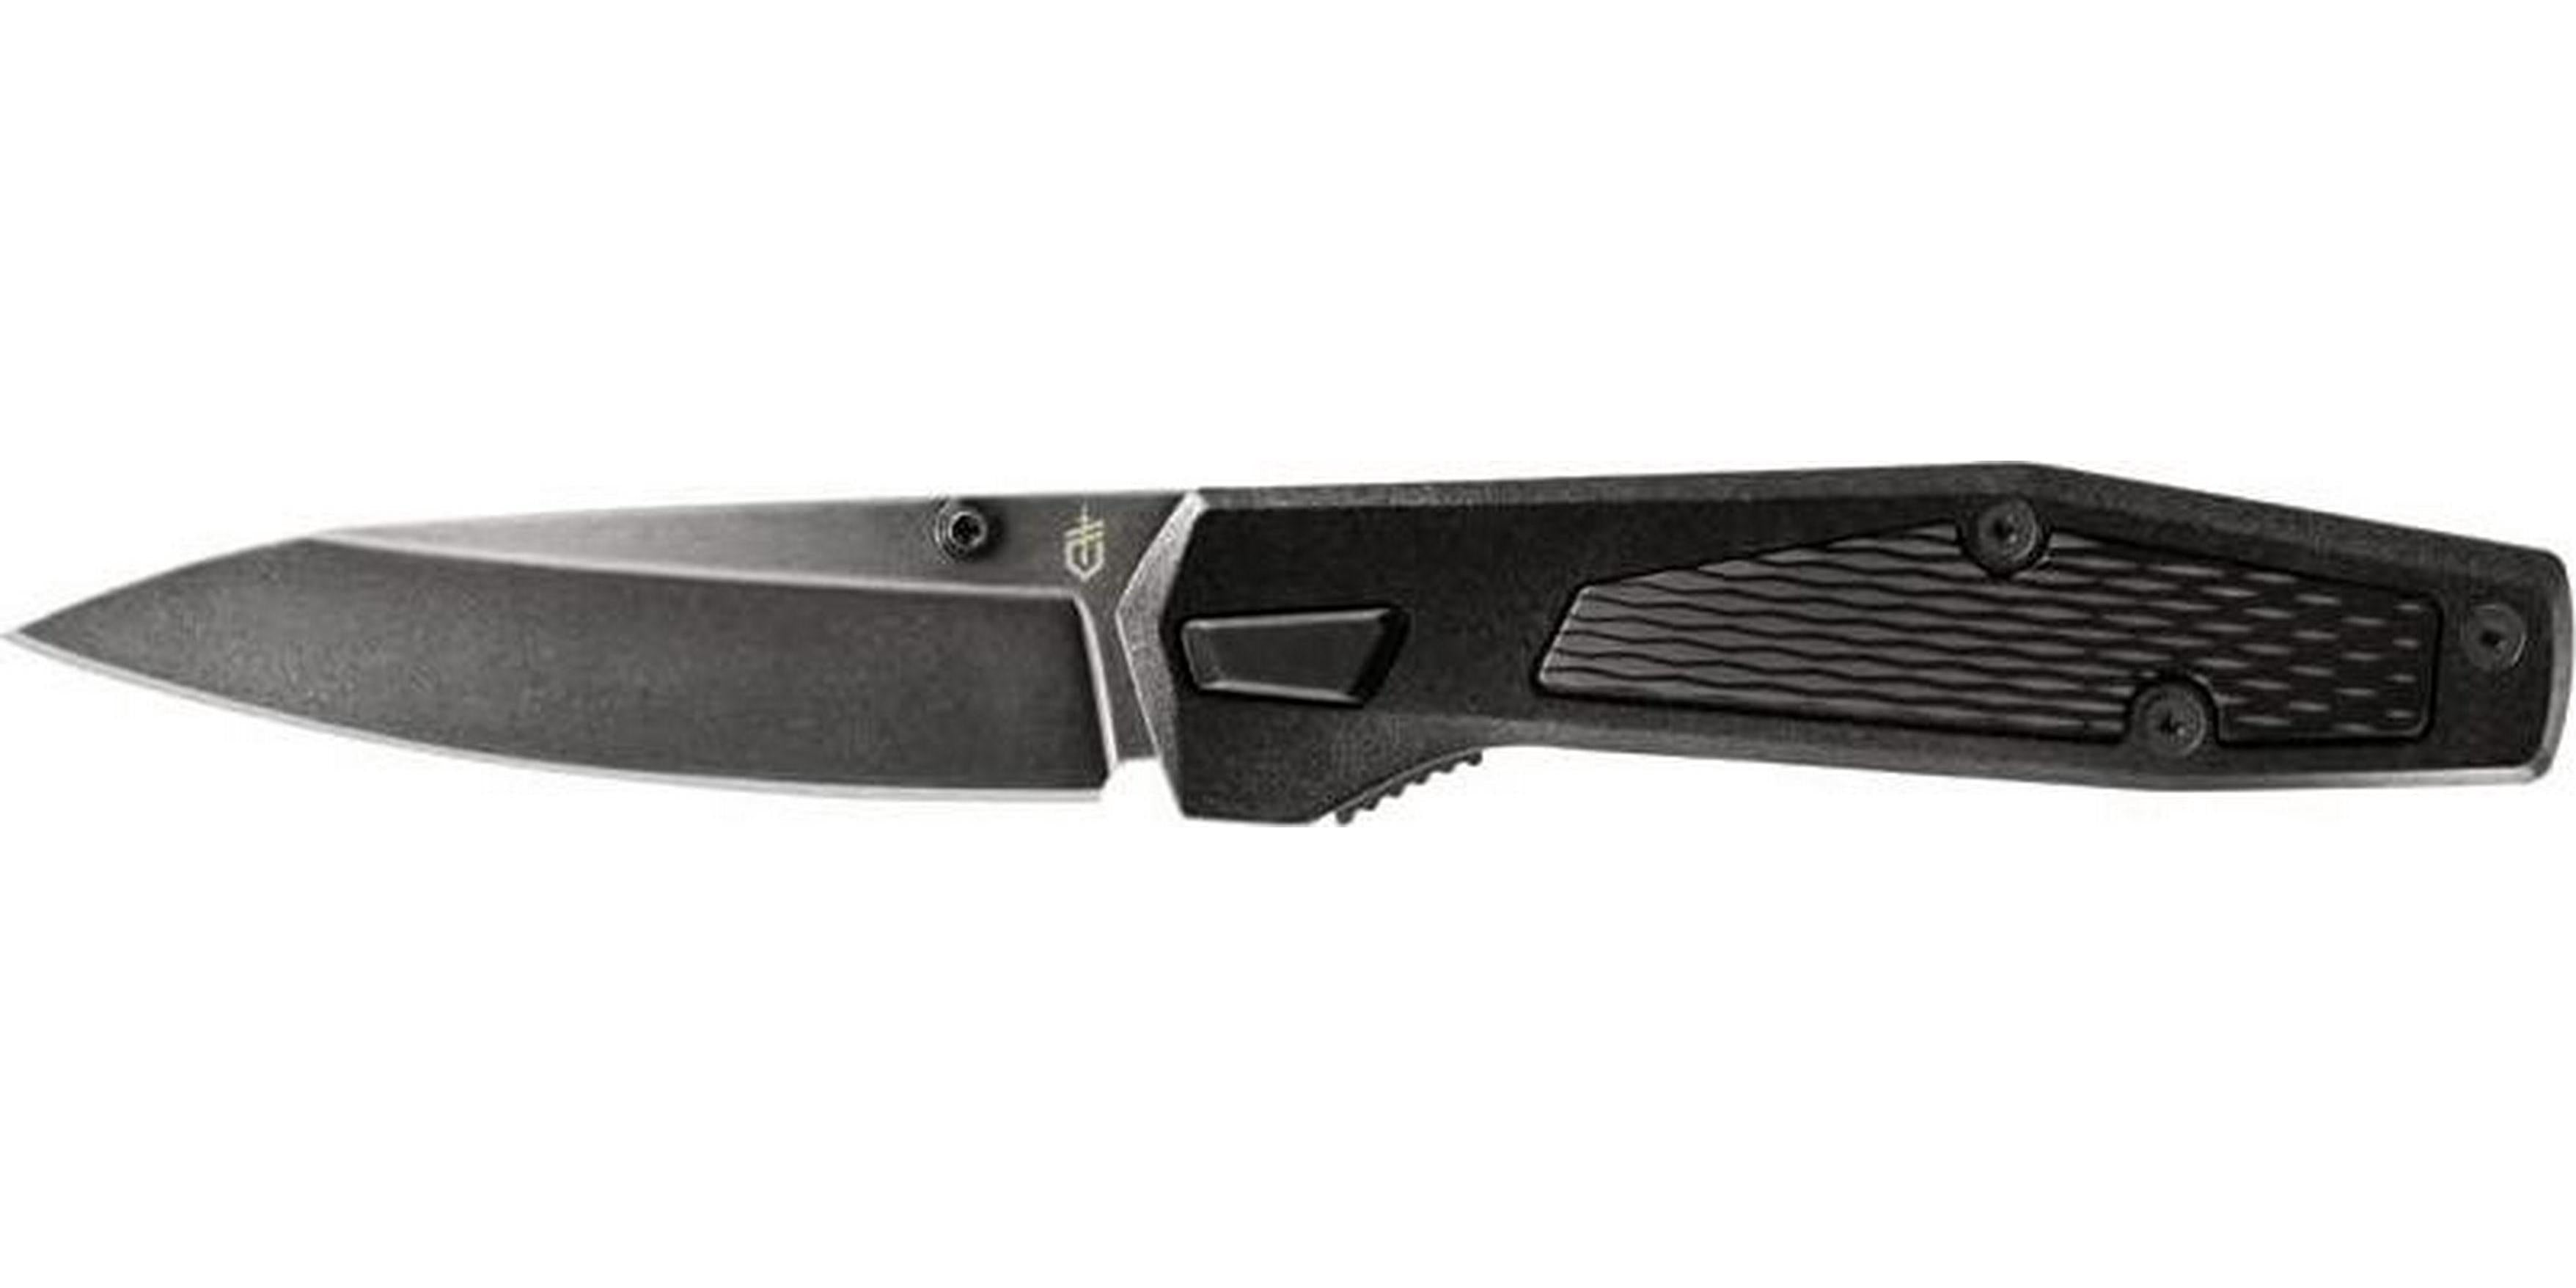 Gerber Gear, Gerber Gear Fuse Pocket Knife, 3.3 Inch Plane Edge Blade